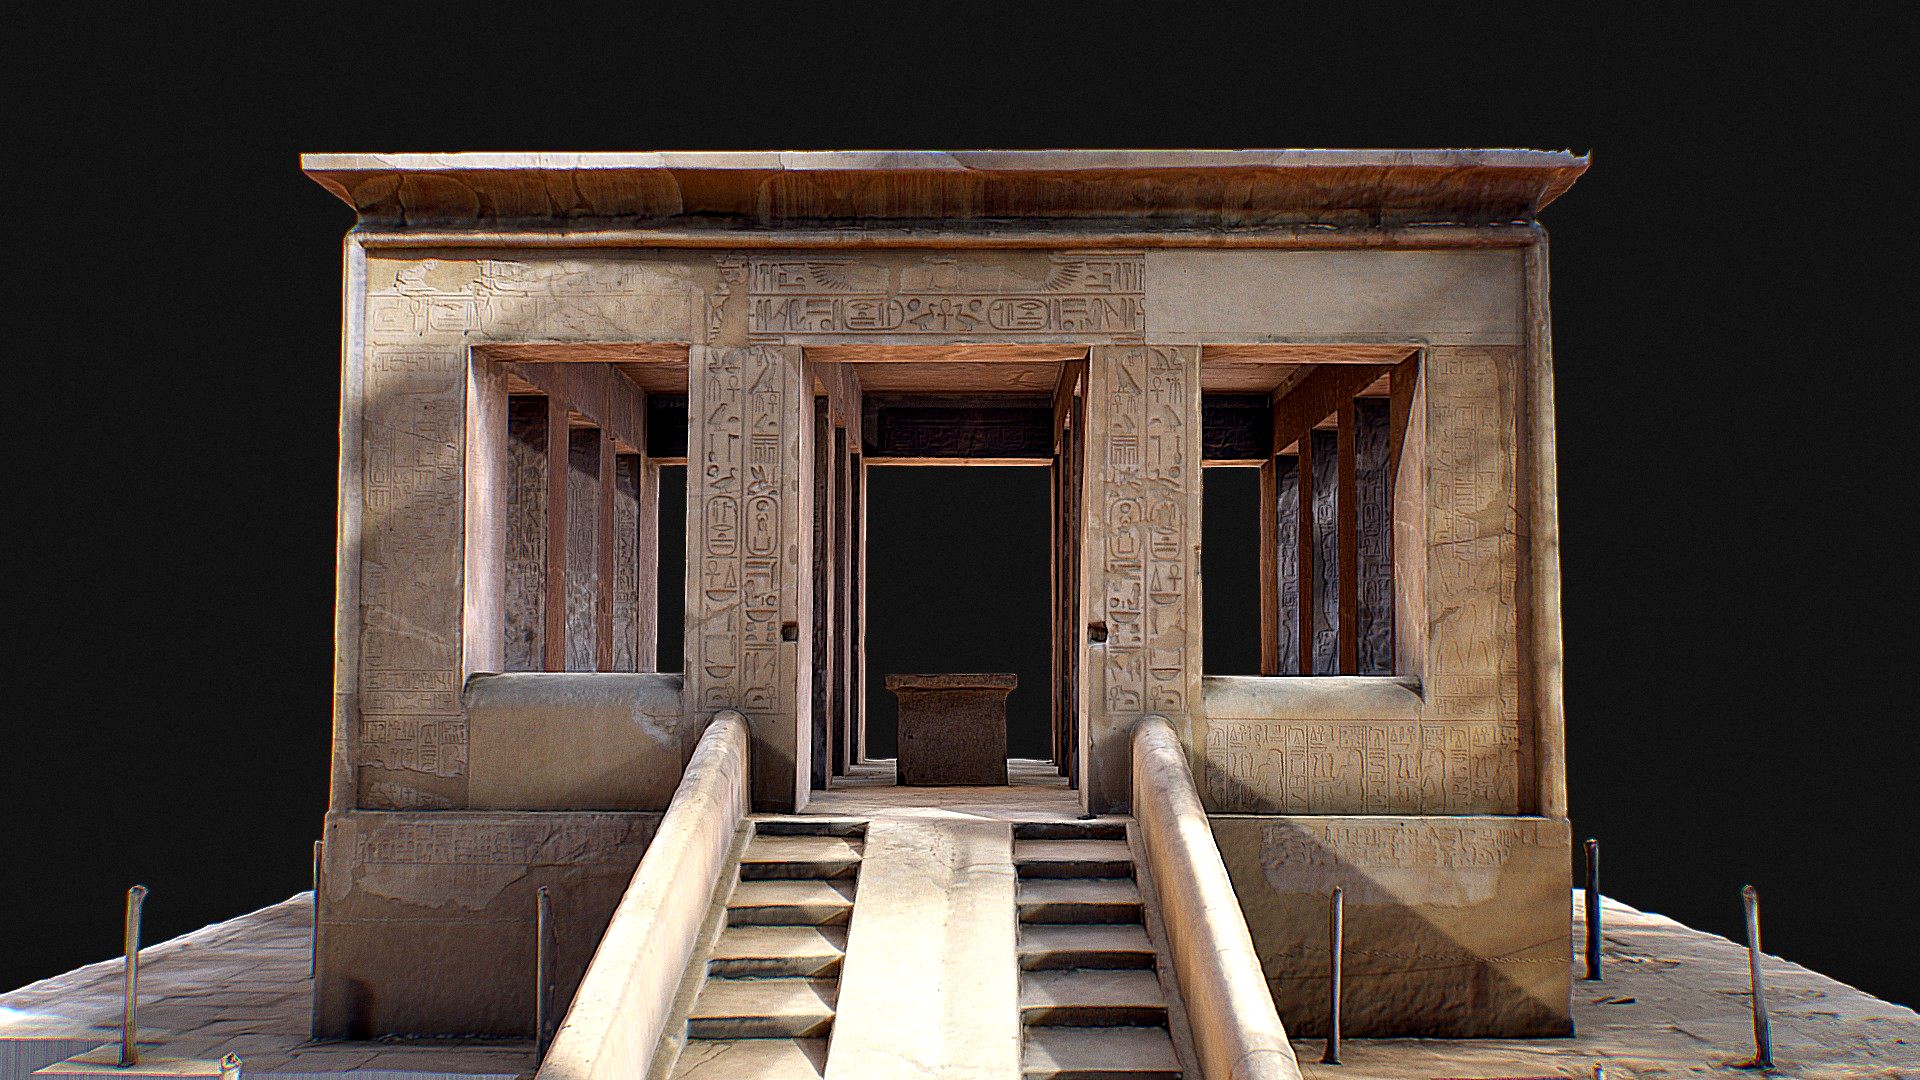 The White Chapel of pharaoh Senusret I